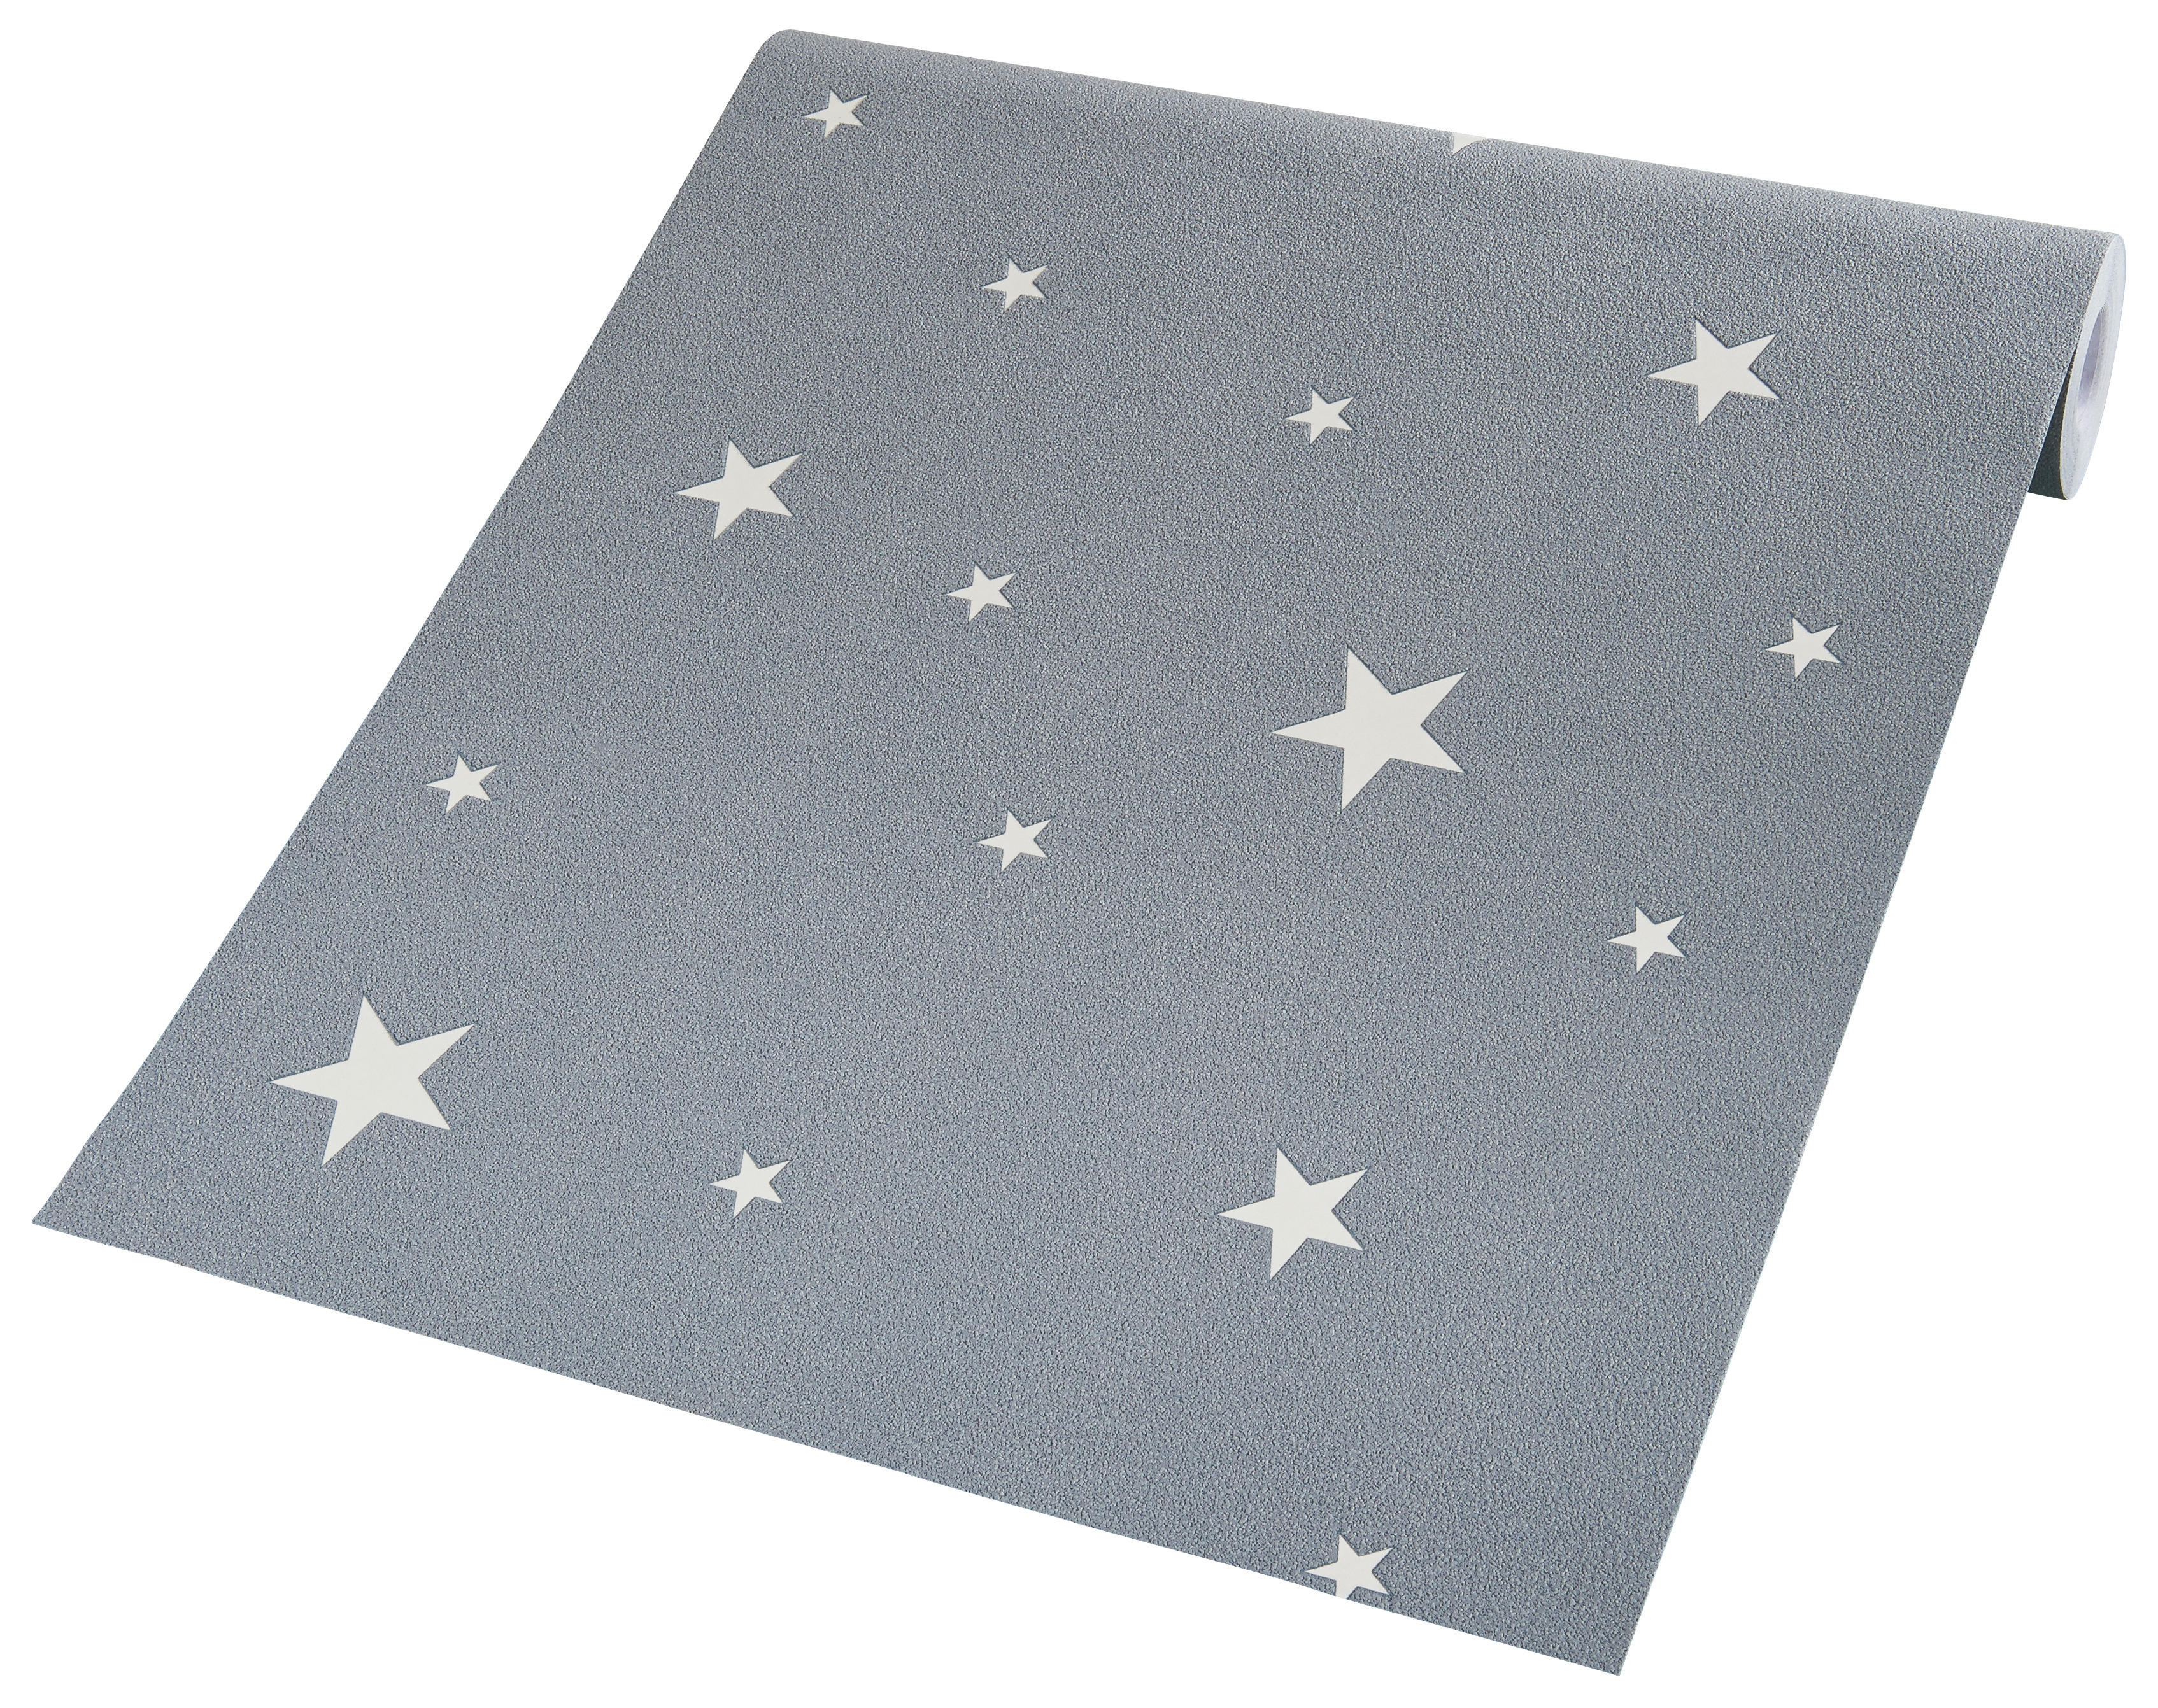 Vliestapete Sterne grau B/L: ca. 53x1005 cm Vliestapete_32440-3 VW9 - grau (53,00/1005,00cm)